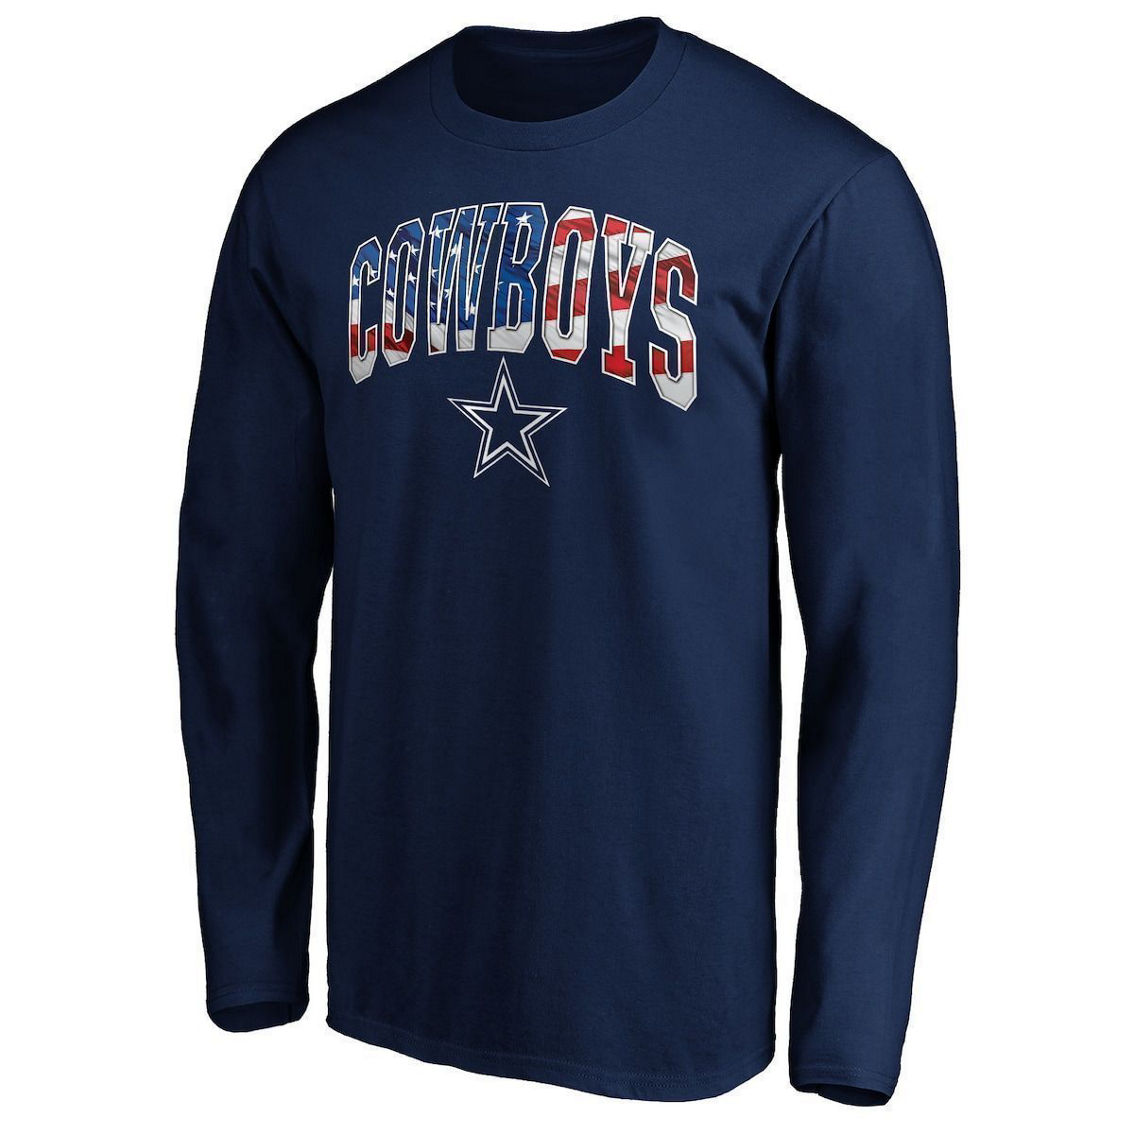 Fanatics Branded Men's Navy Dallas Cowboys Banner Wave Long Sleeve T-Shirt - Image 3 of 4